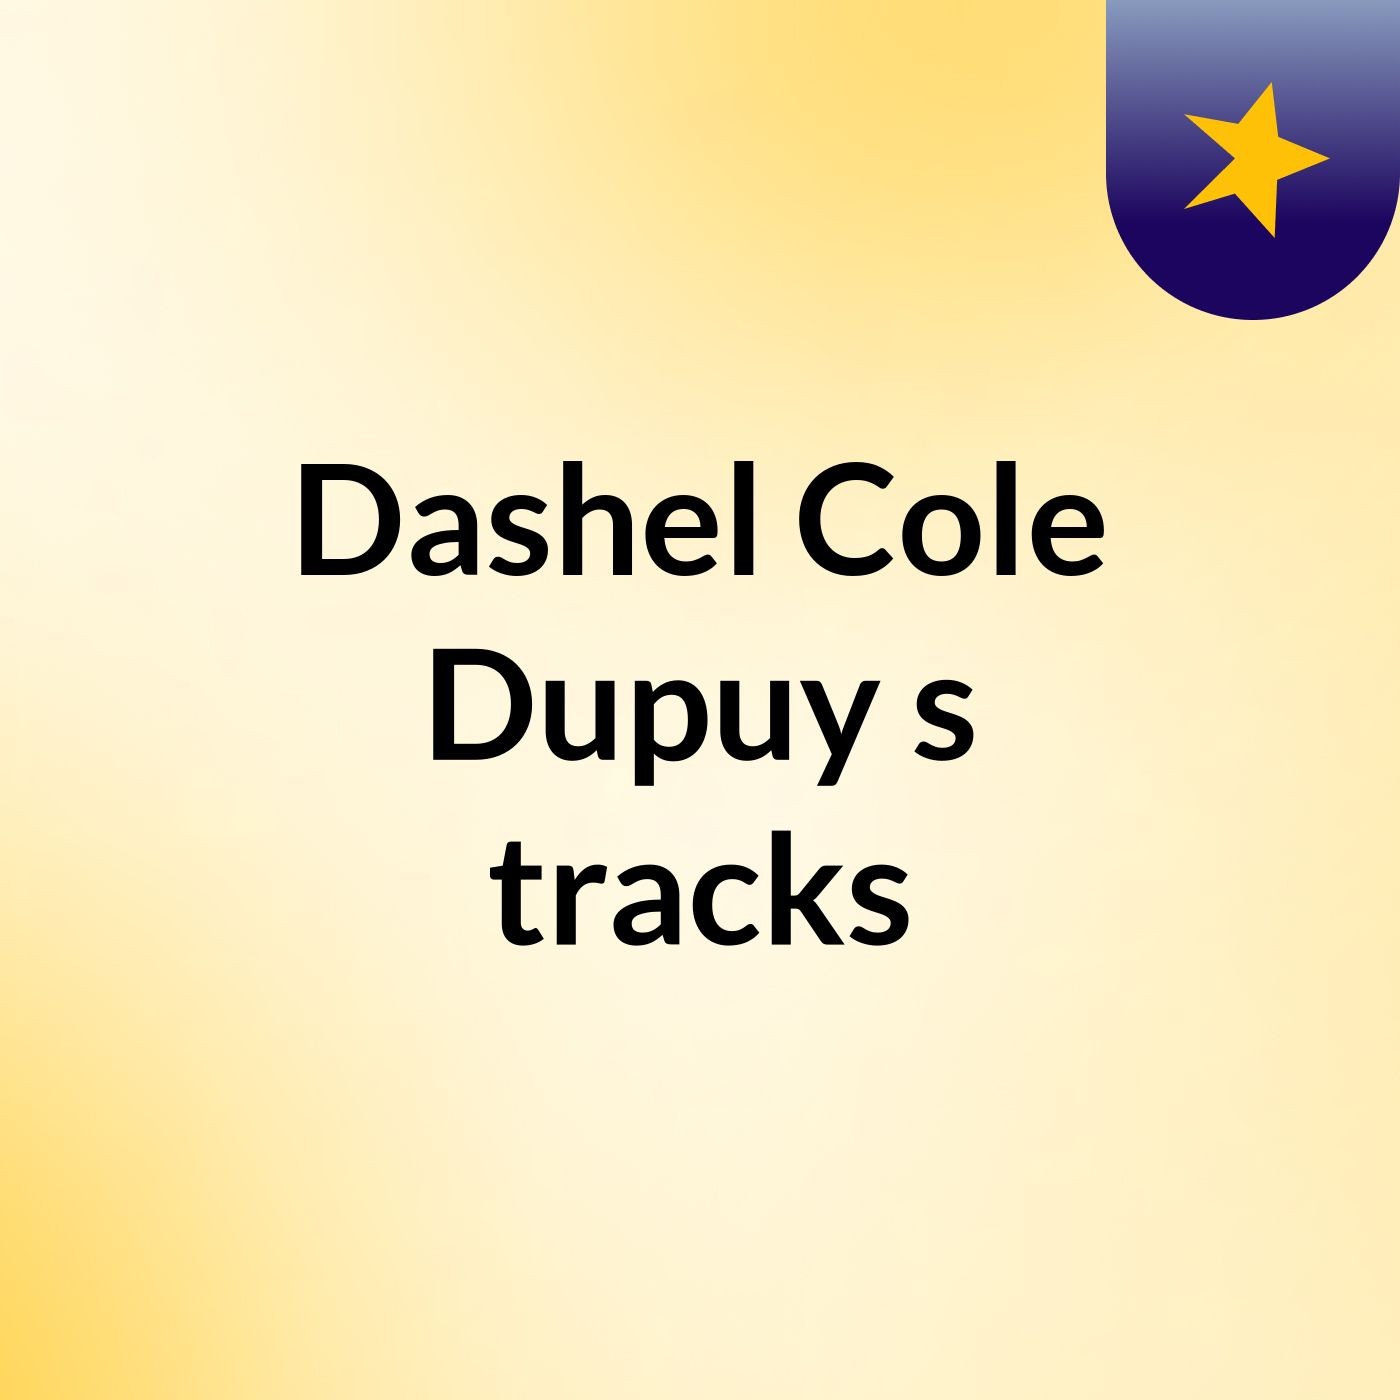 Dashel Cole Dupuy's tracks